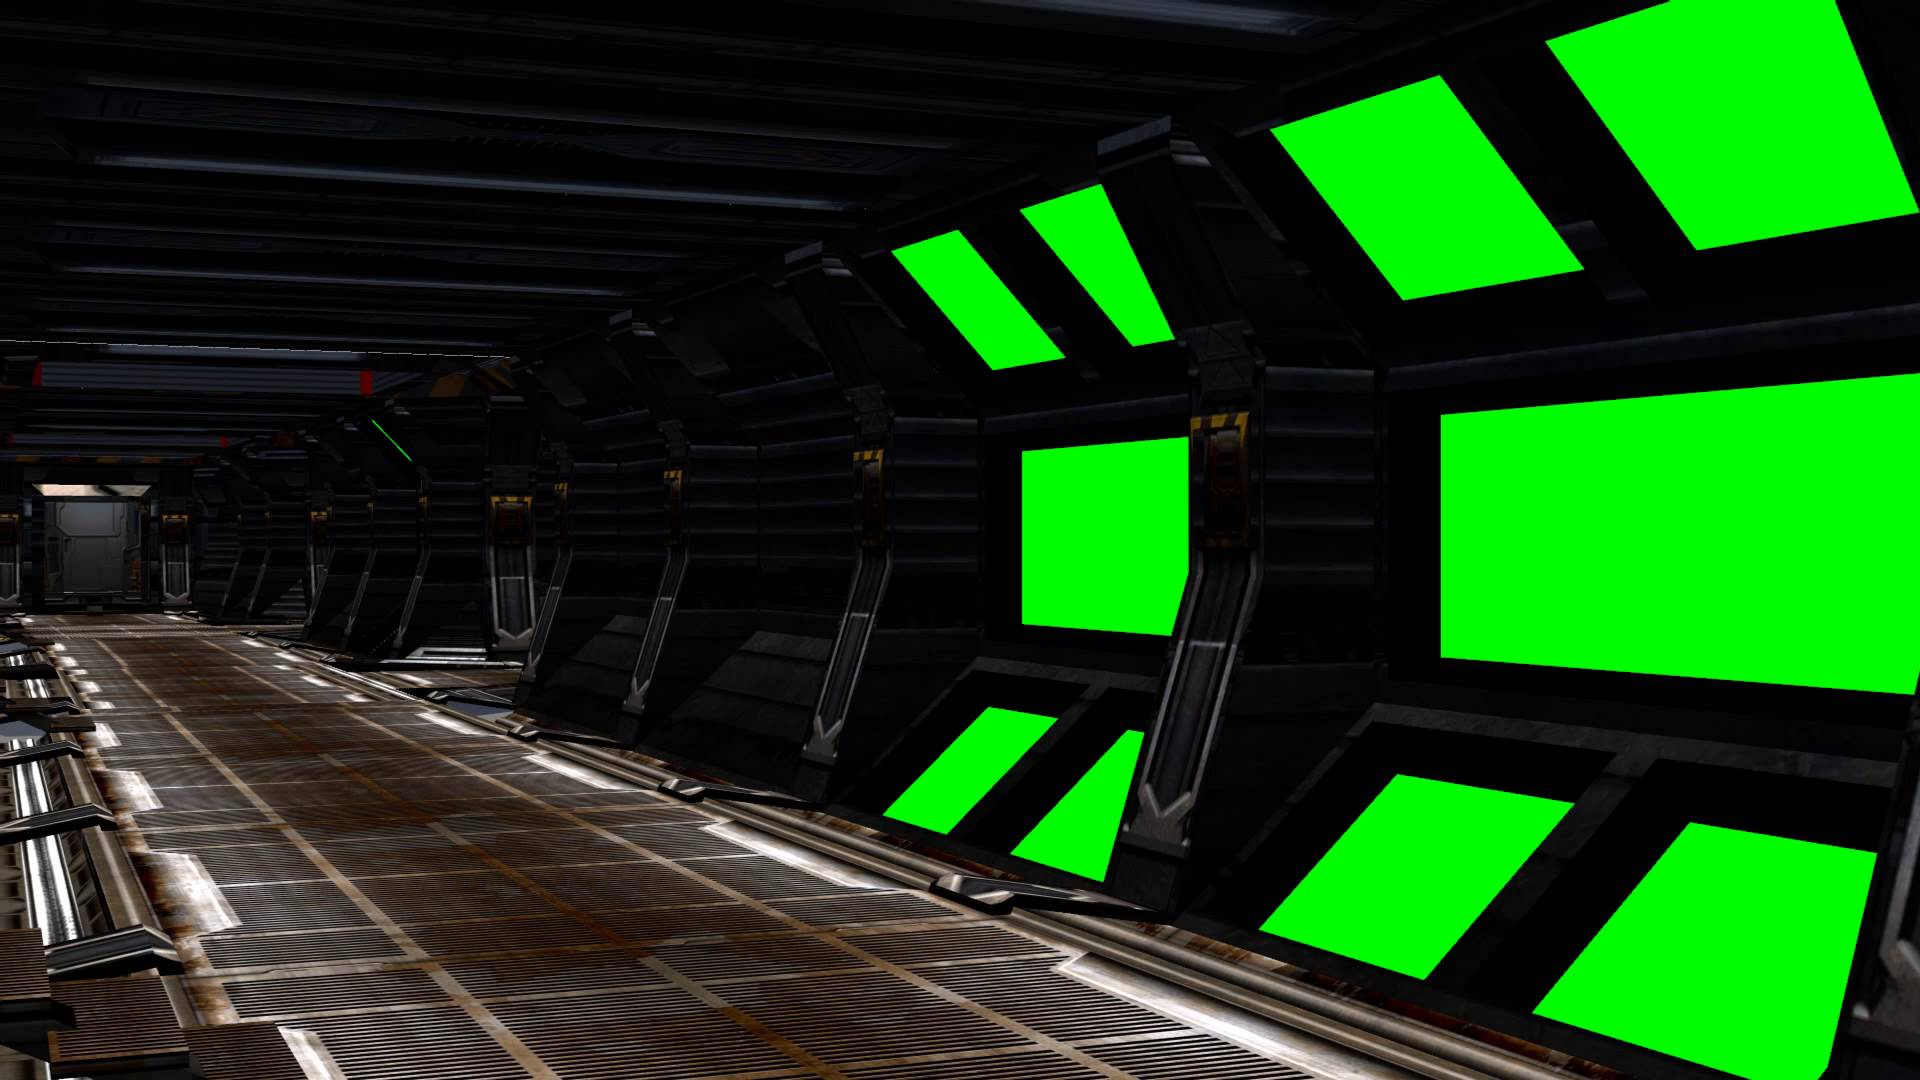 Spaceship Interior With Sound Green Screen Set B